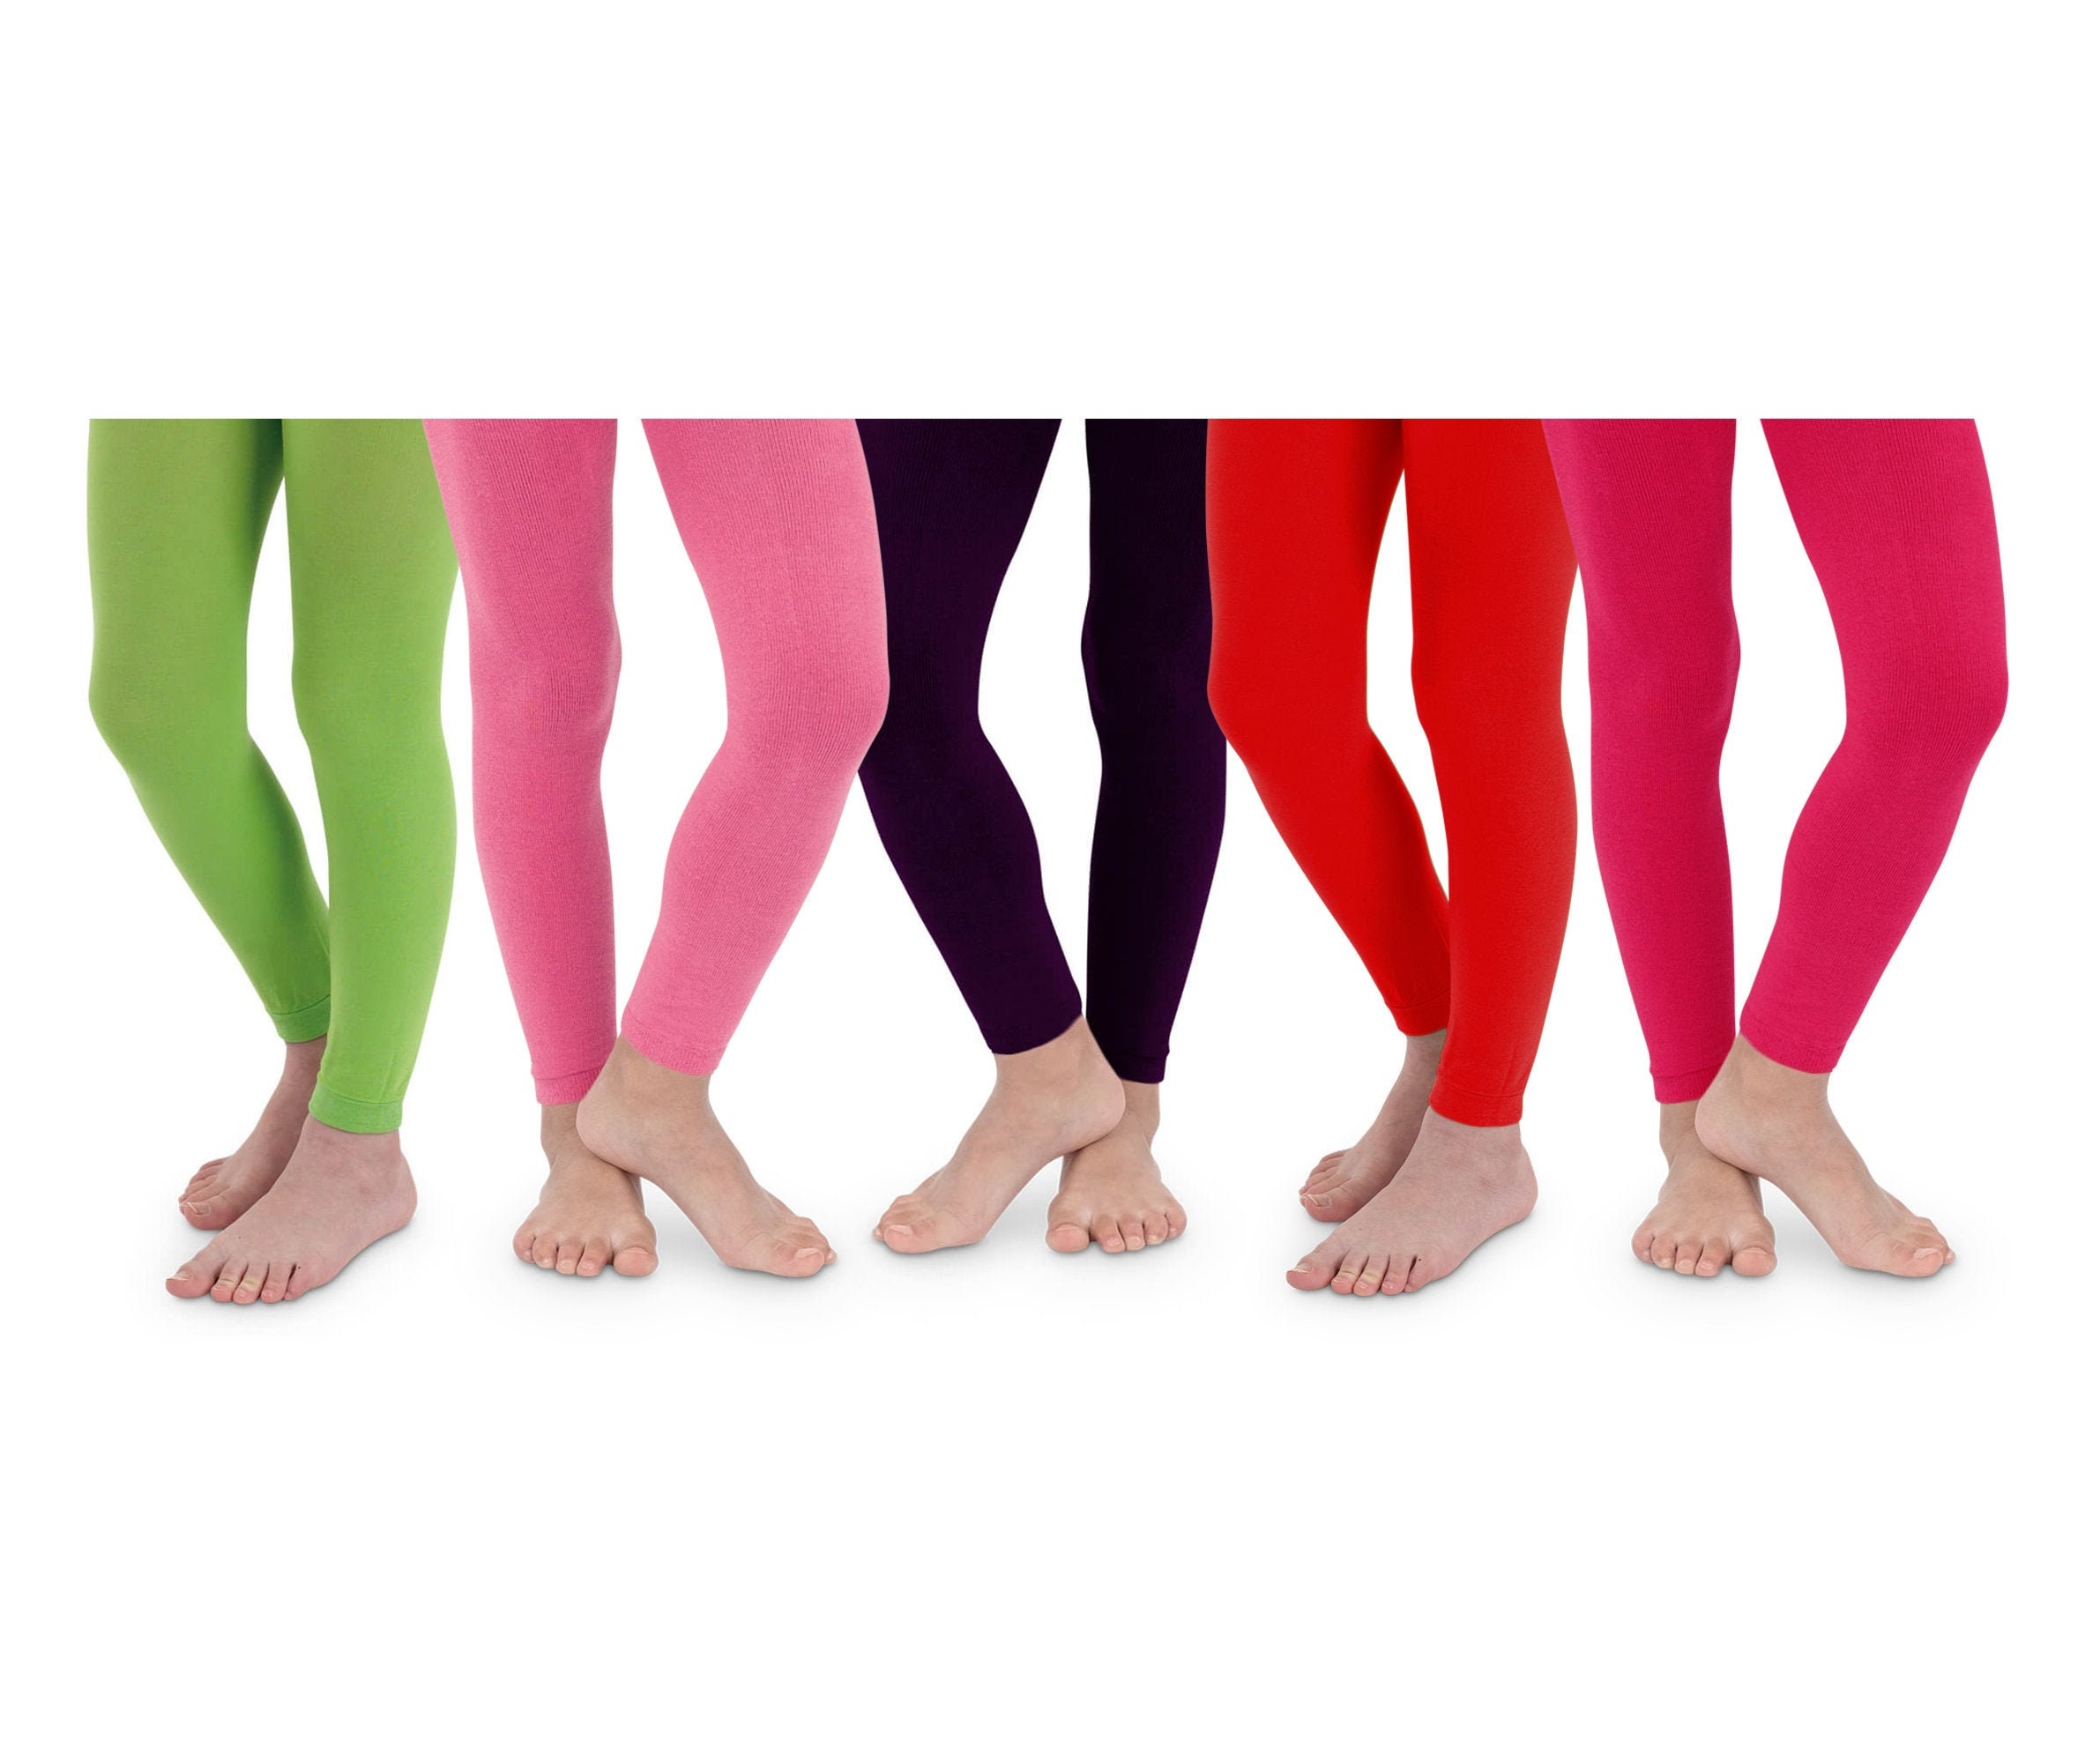 Girls Legging Tights Colorful Footless Stockings Cotton Fashion